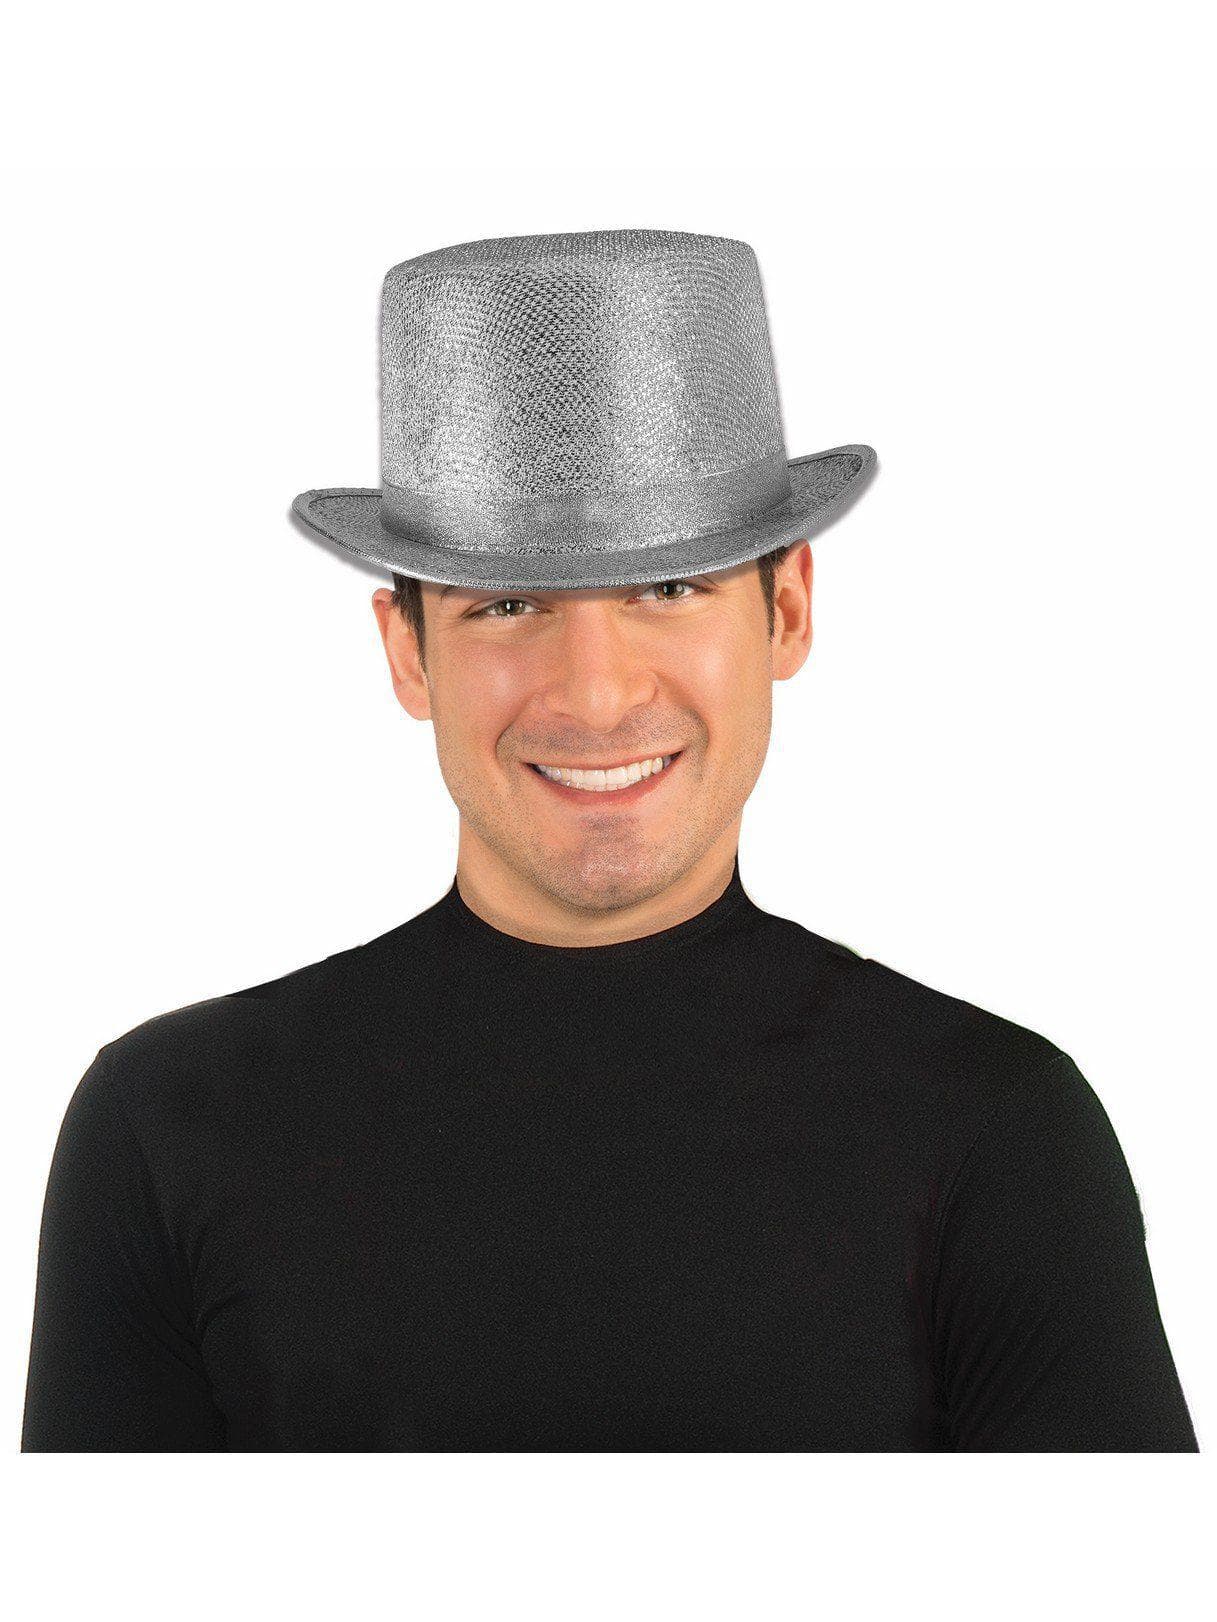 Adult Silver Classic Top Hat - costumes.com